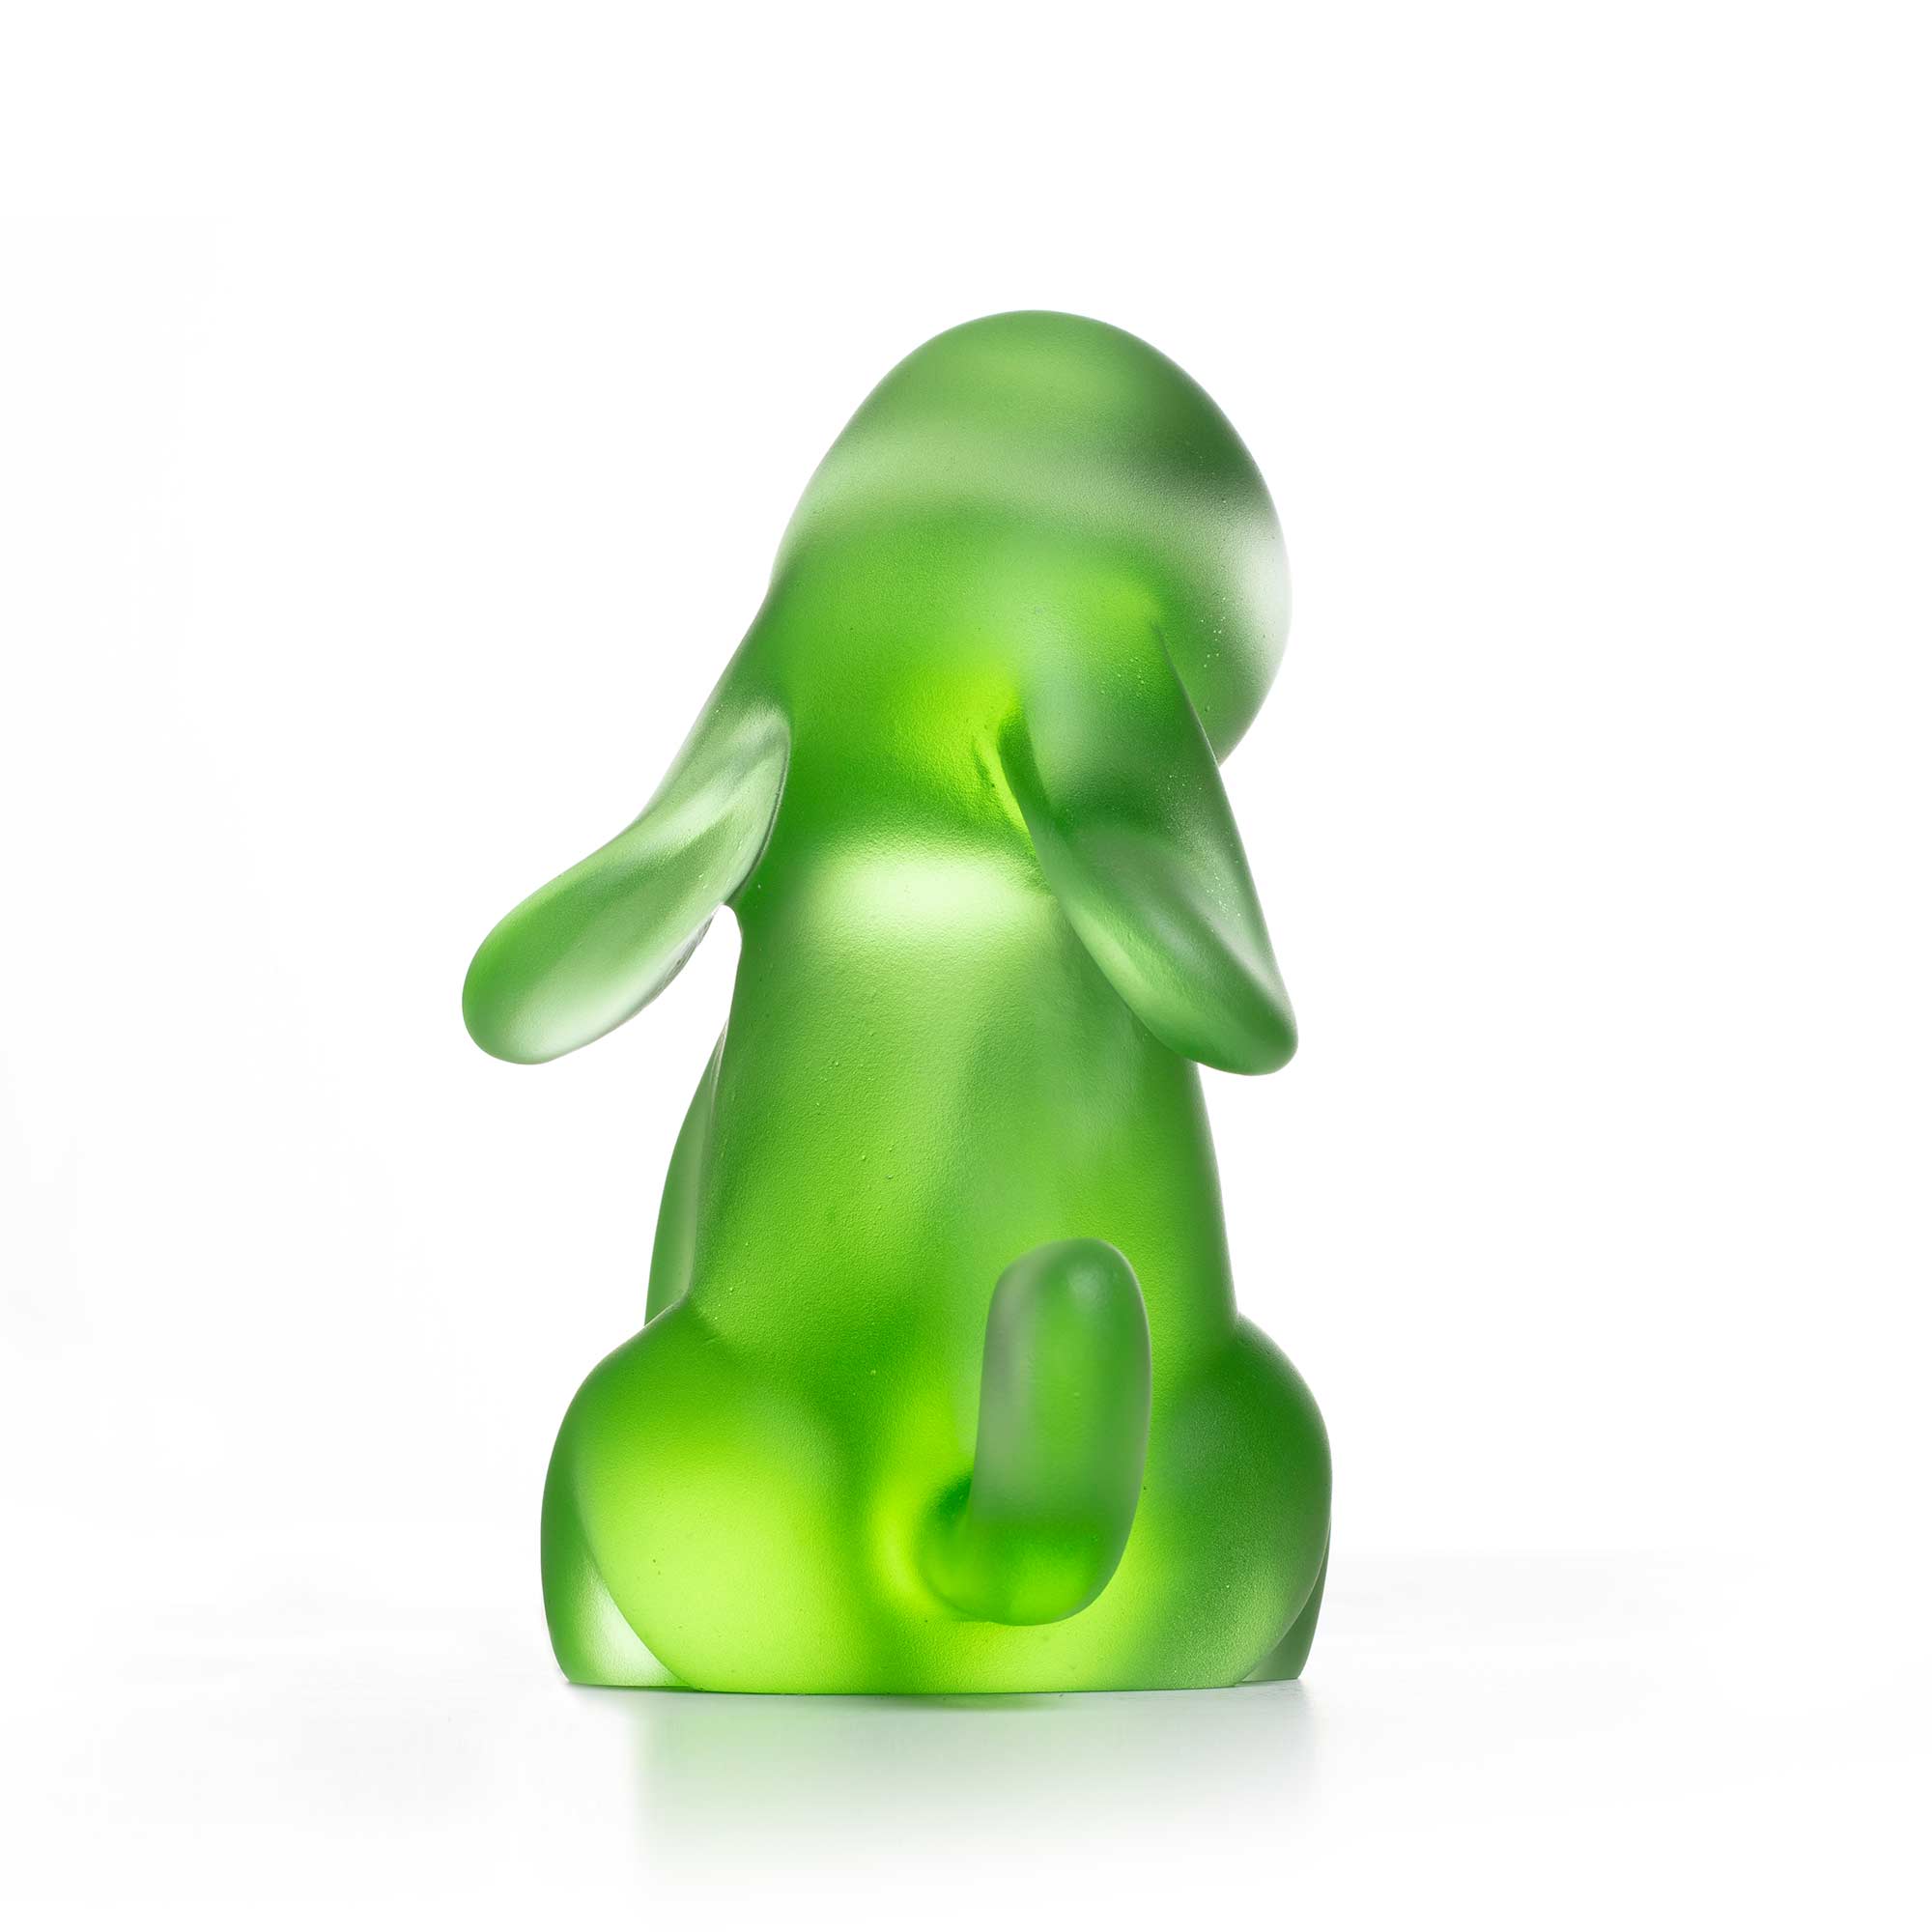 Dog Roar, green crystal sculpture, limited edition by artist Ferdi B Dick, back view